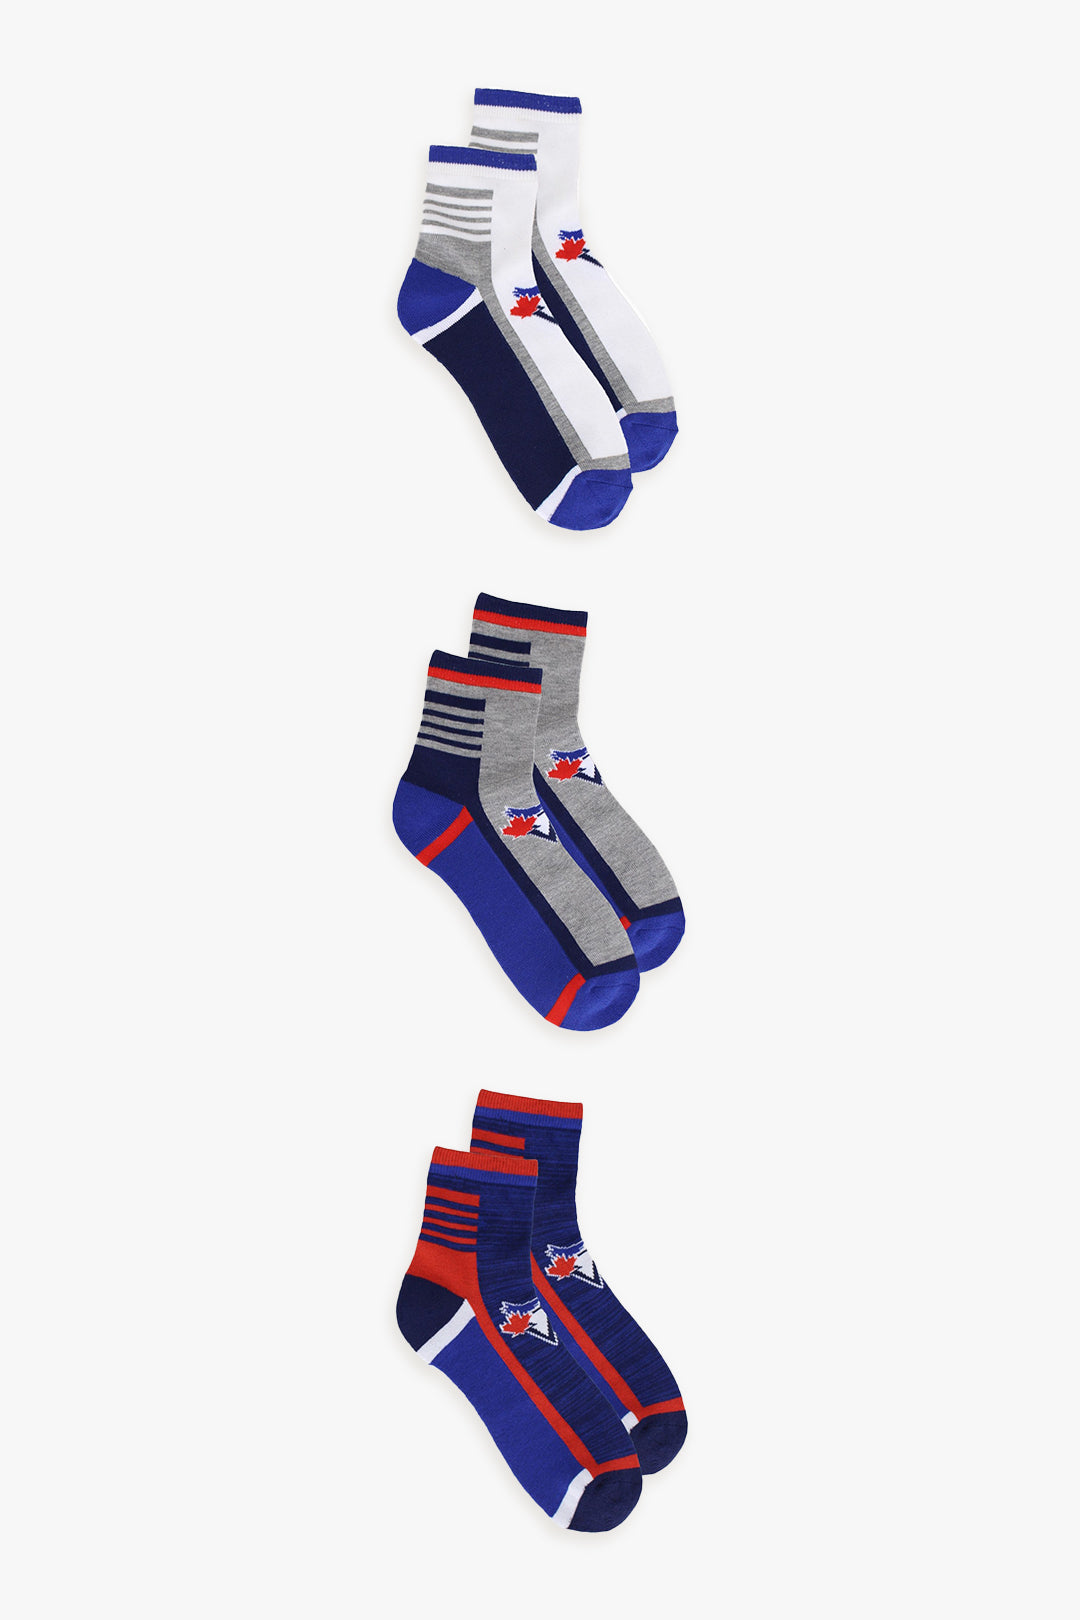 Toronto Blue Jays Socks Quarter Length 3 Pack Mens Shoe Size 7-12